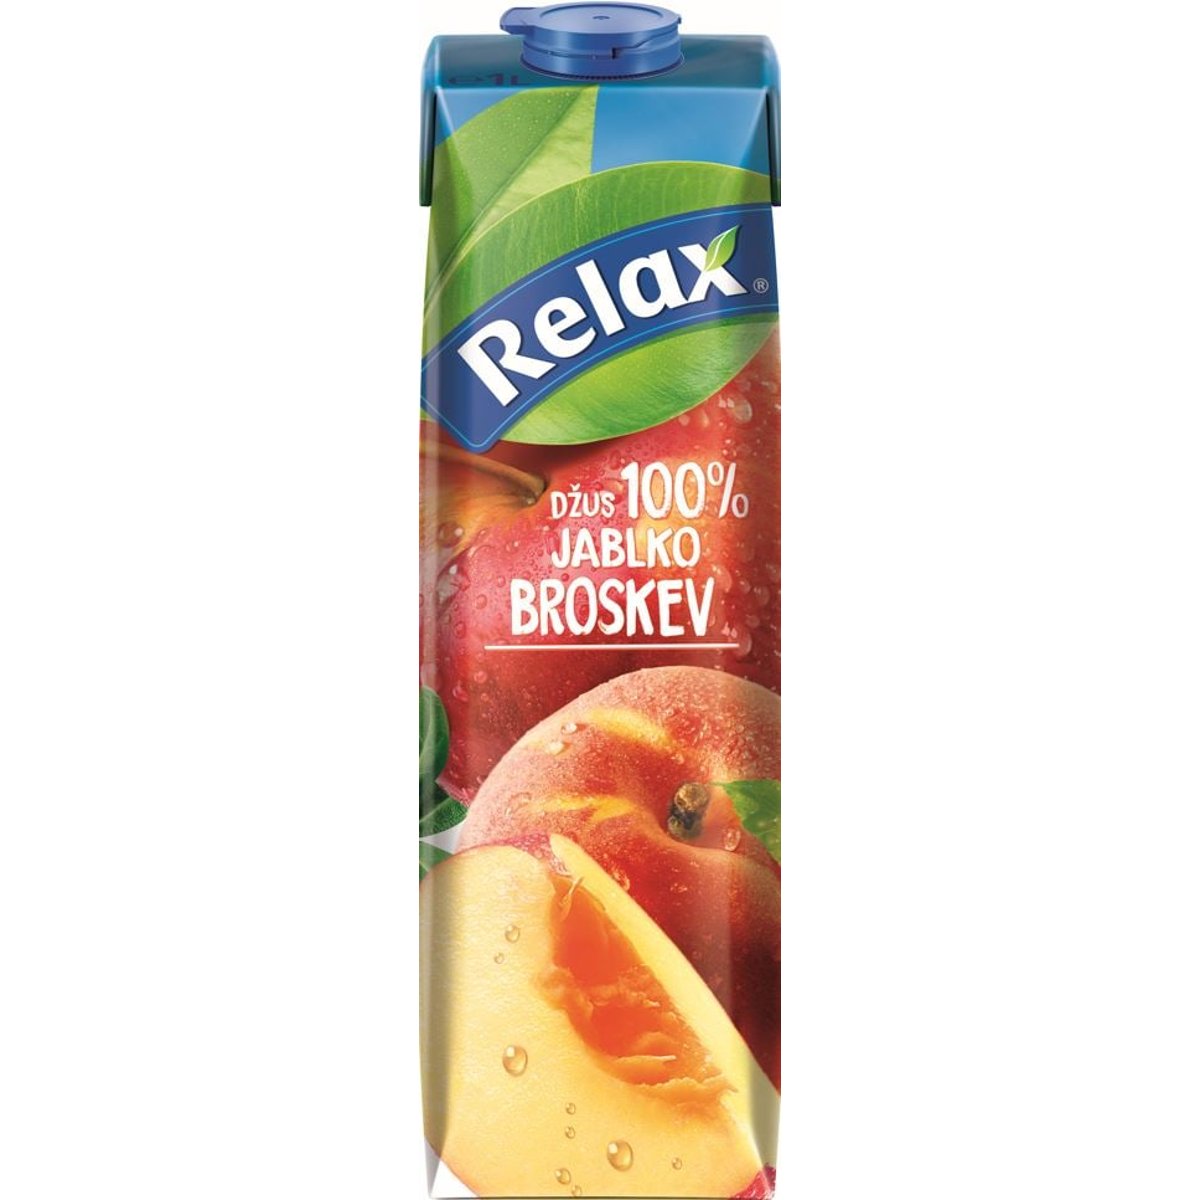 Relax 100% jablko broskev